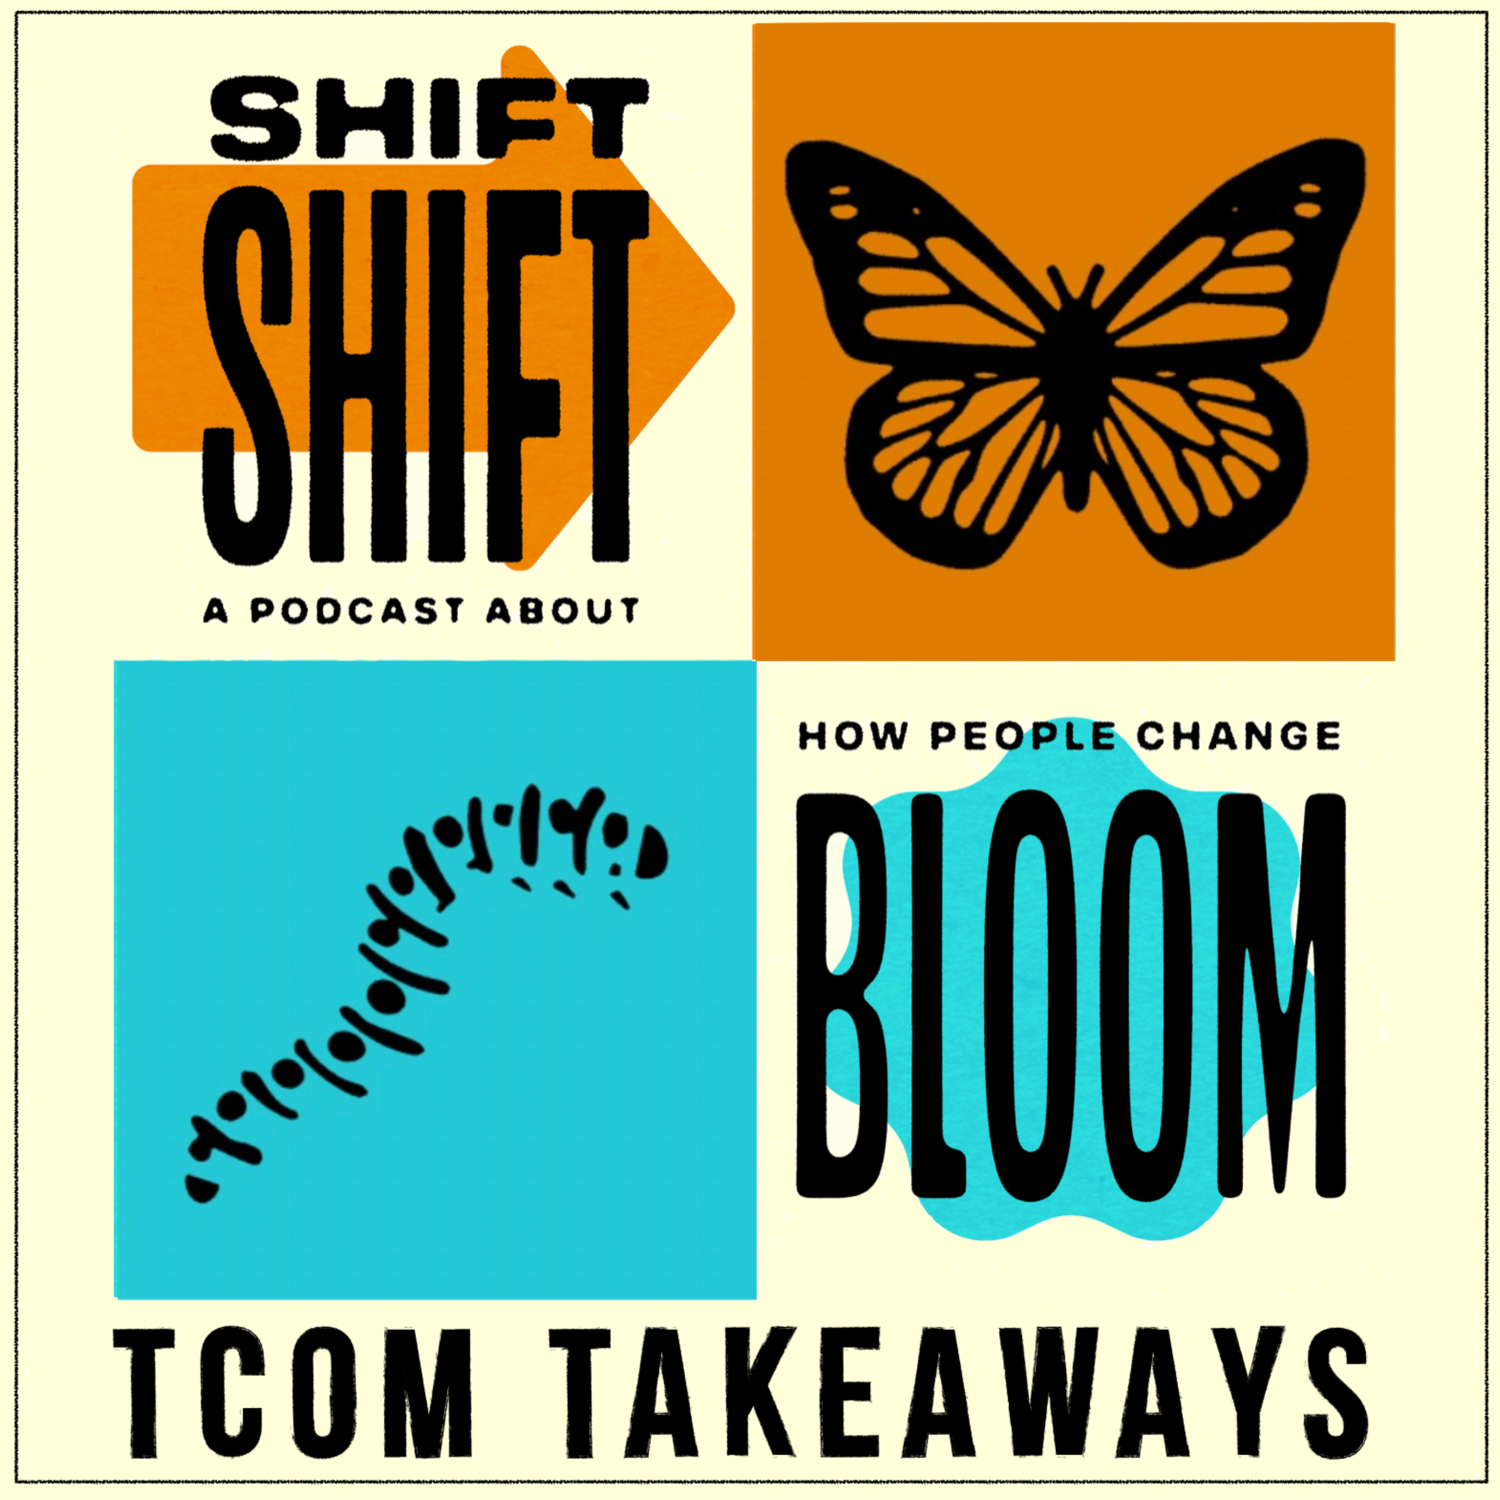 Artwork for podcast Shift Shift Bloom